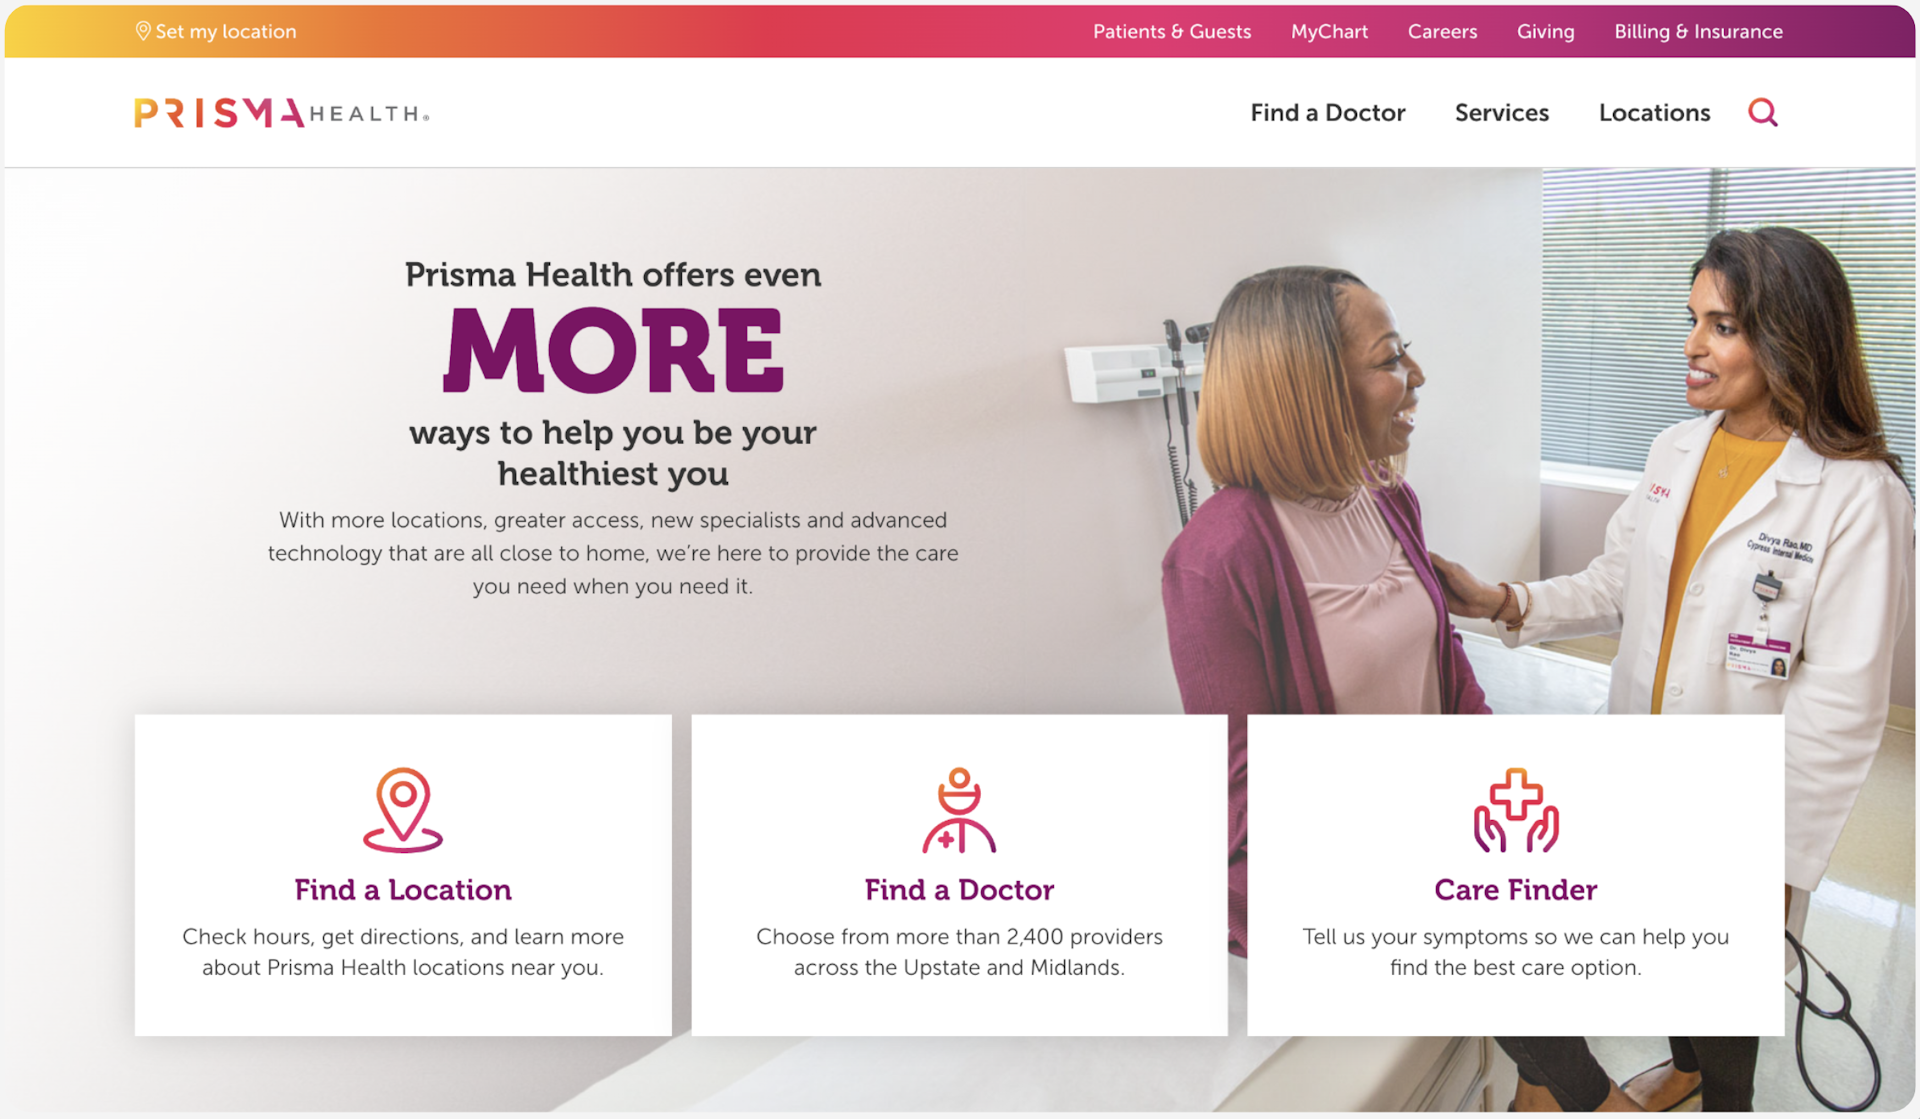 Prisma Health's homepage